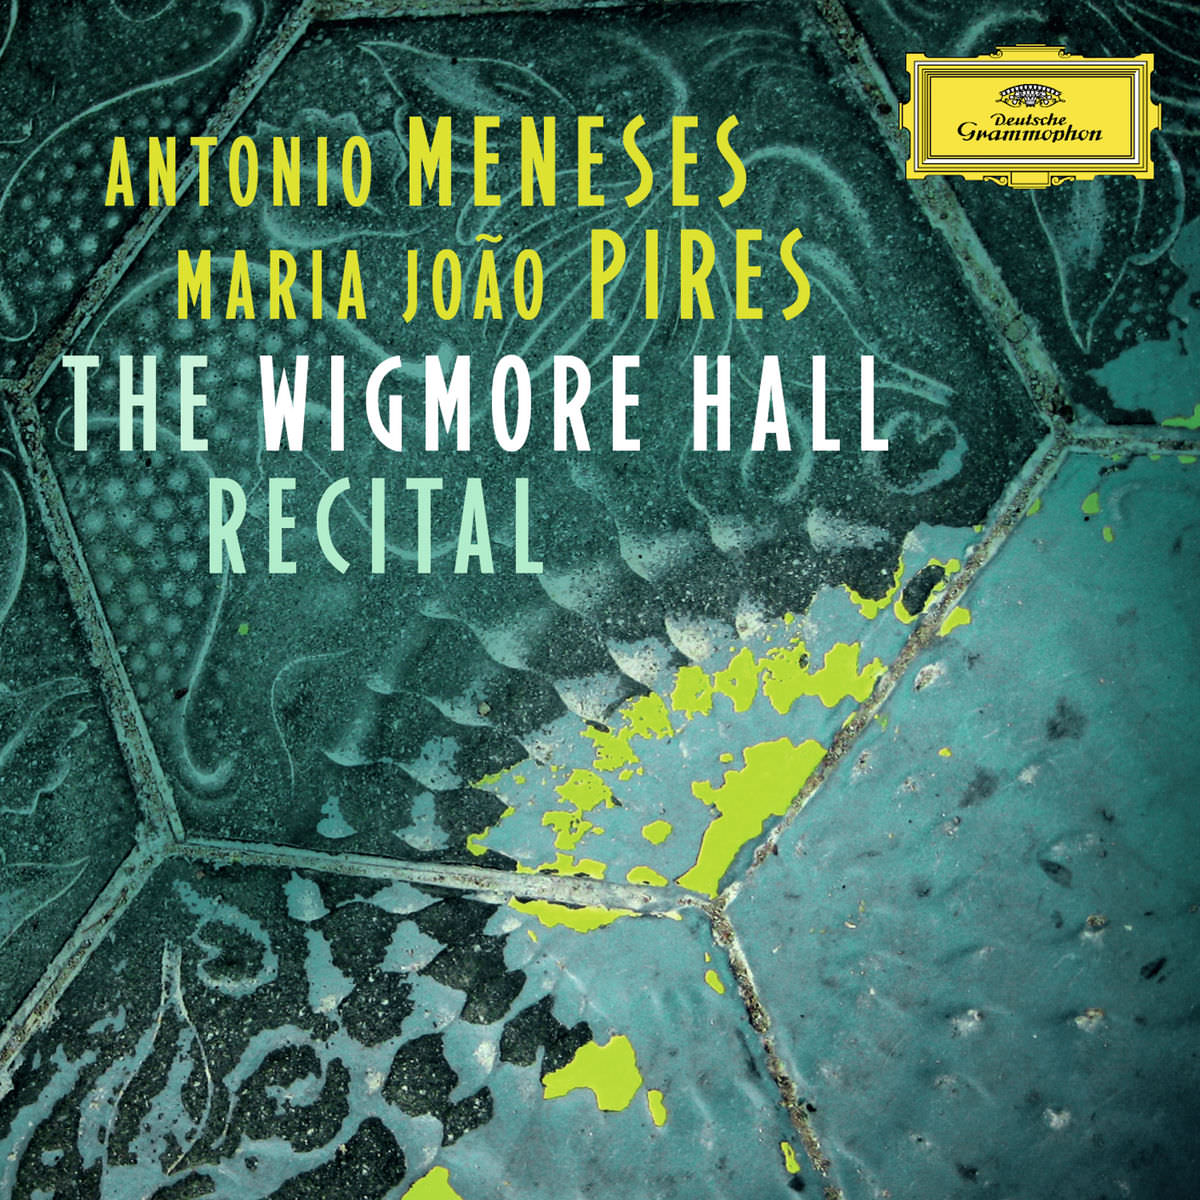 Antonio Meneses & Maria Joao Pires – The Wigmore Hall Recital (2013) [FLAC 24bit/96kHz]